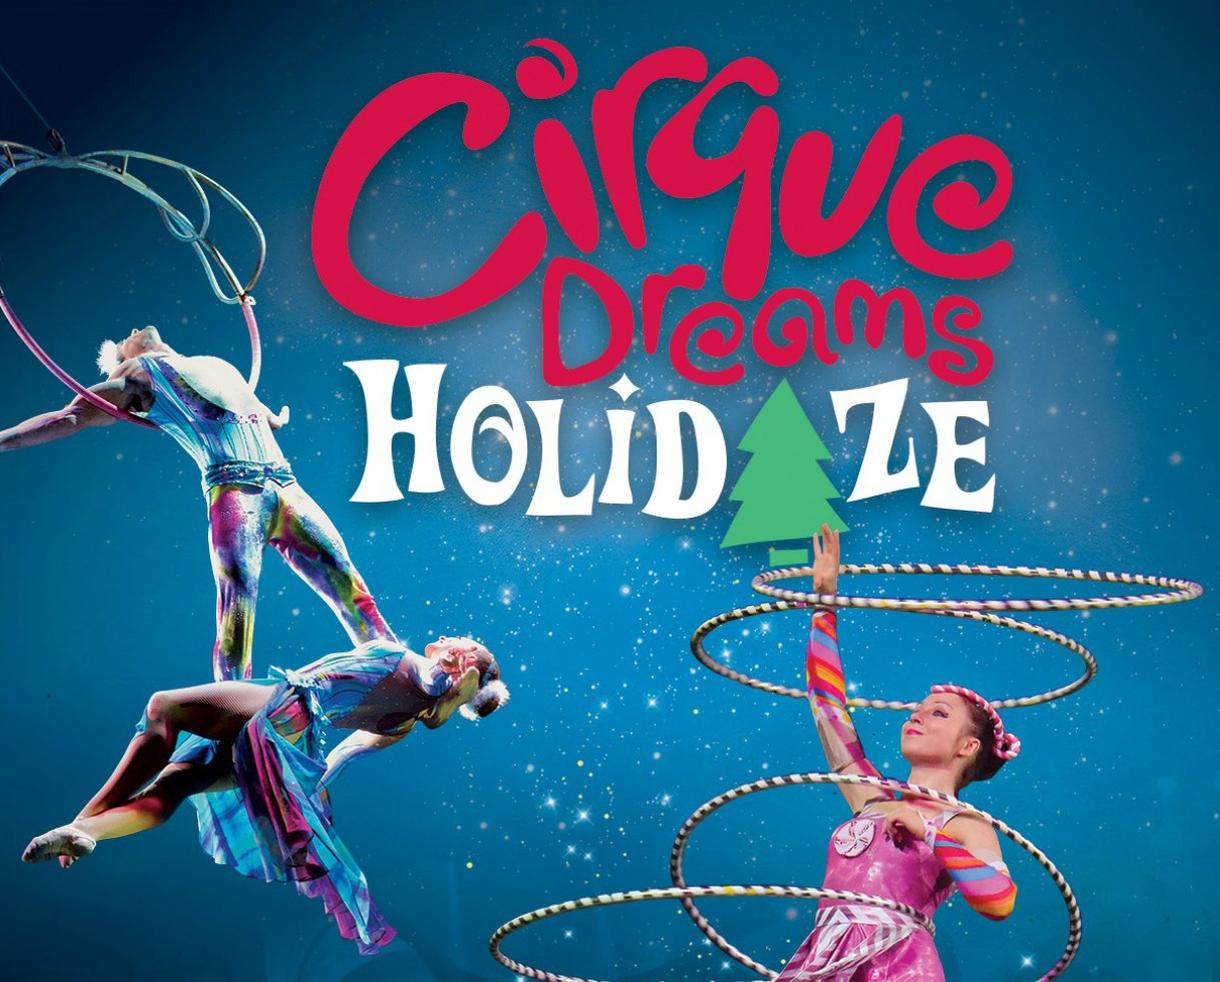 See Cirque Dreams Holidaze at the MGM National Harbor! Mom the